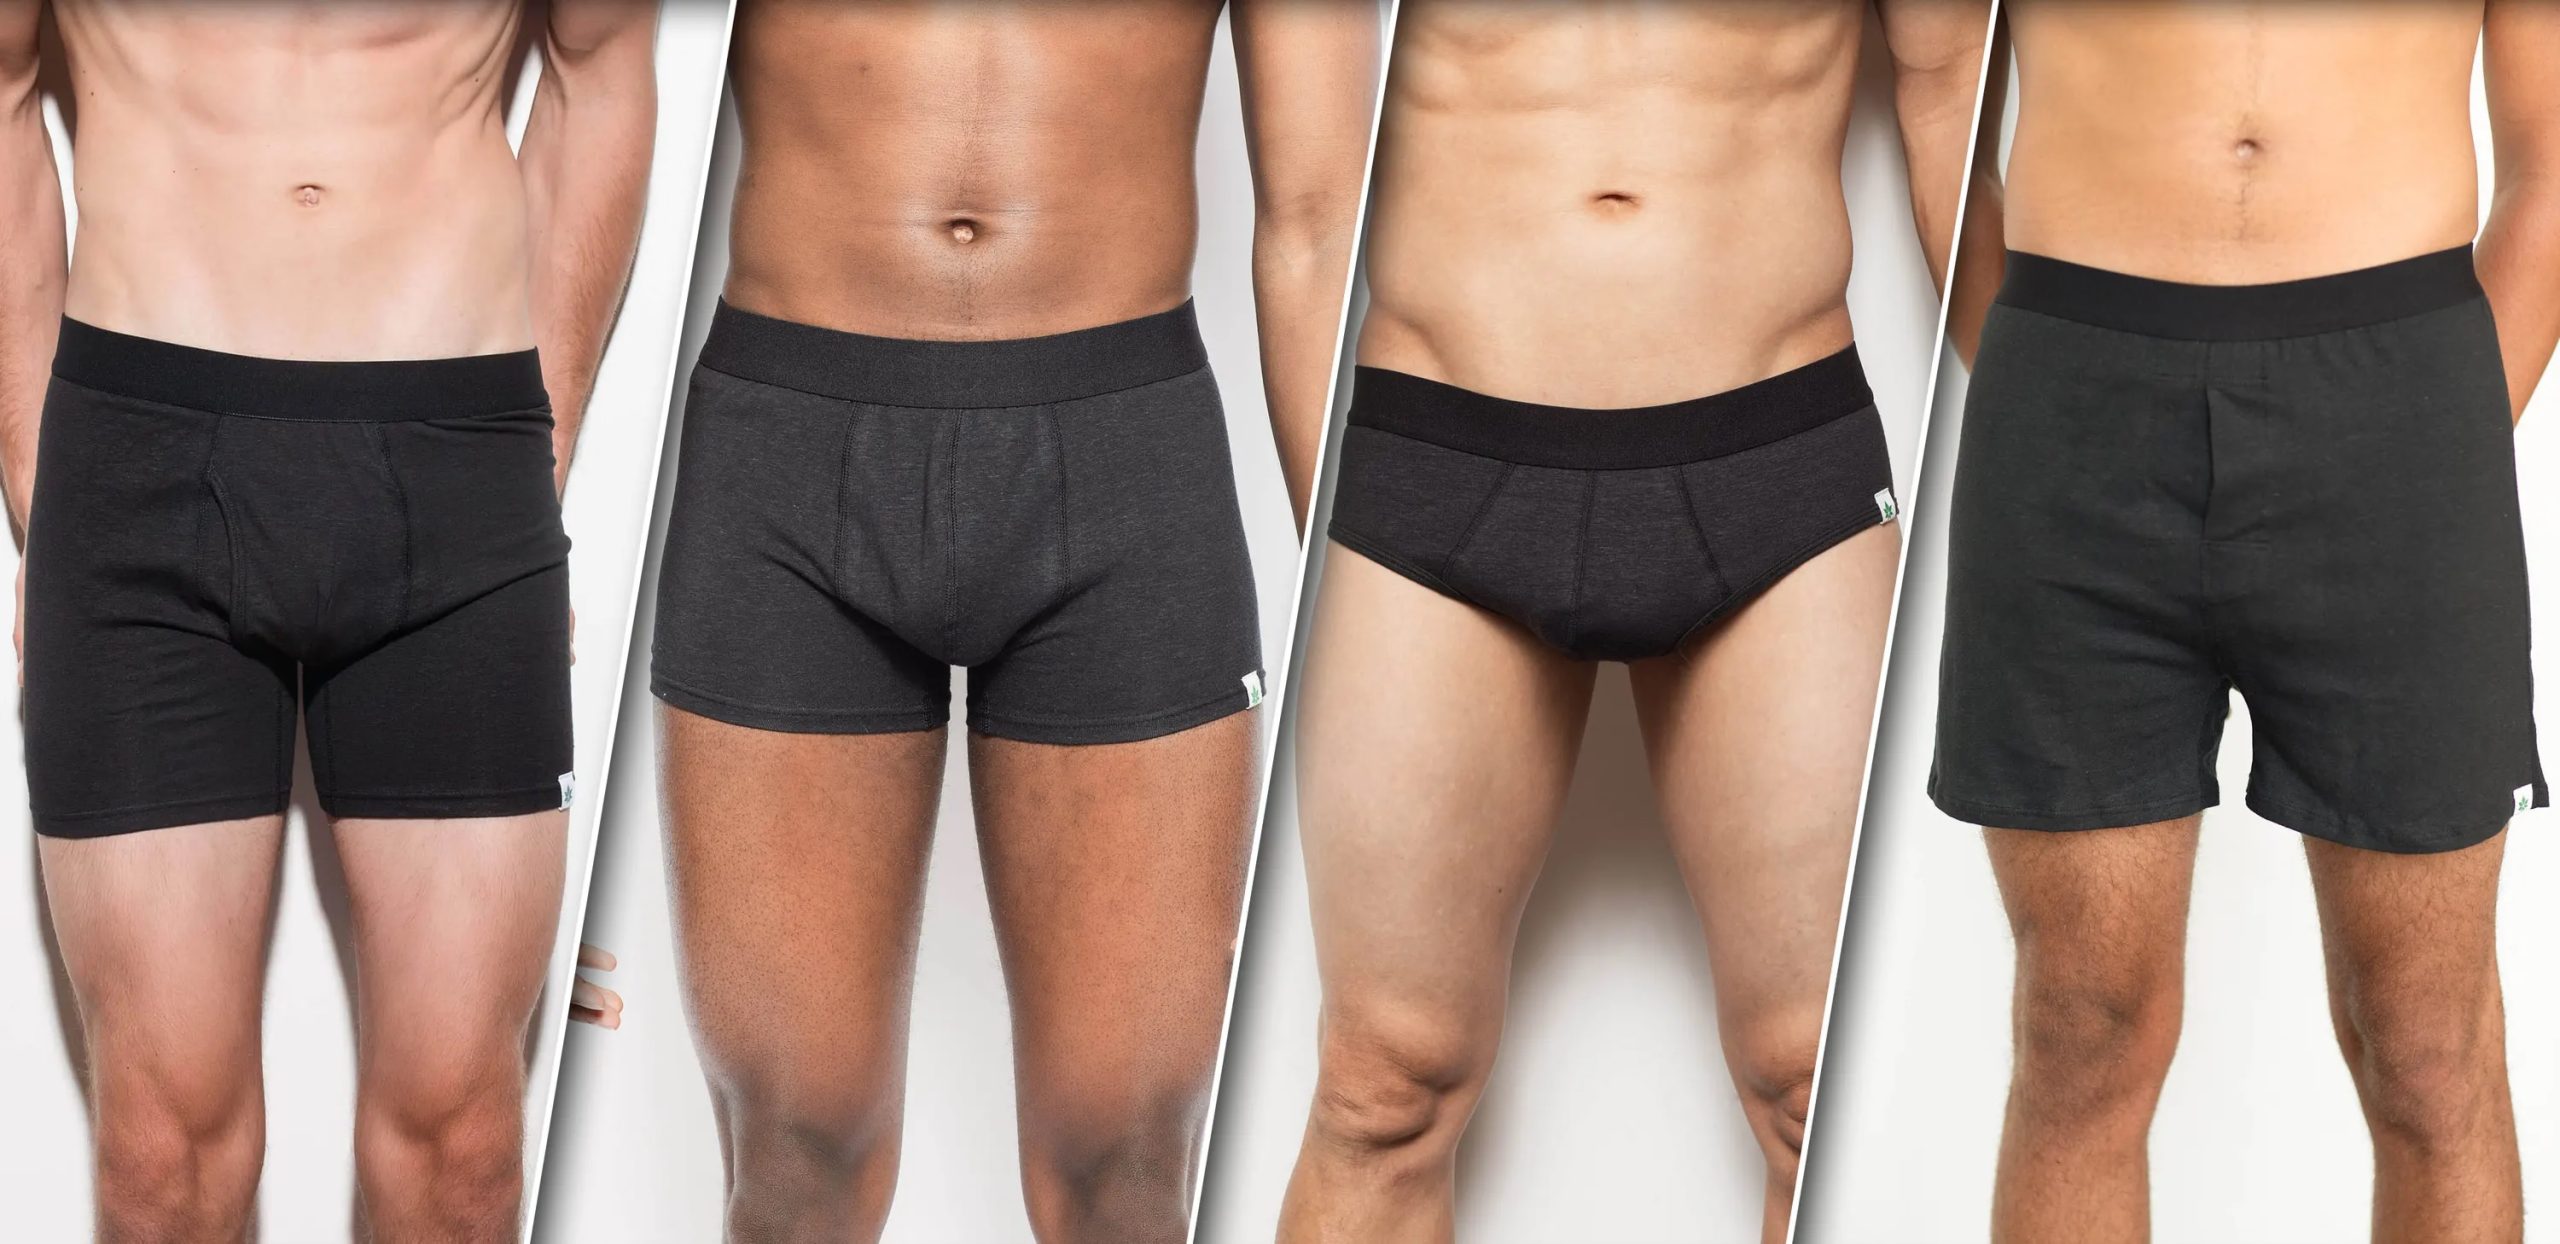 Men’s Underwear designed in a Wide Range of Styles and Brands